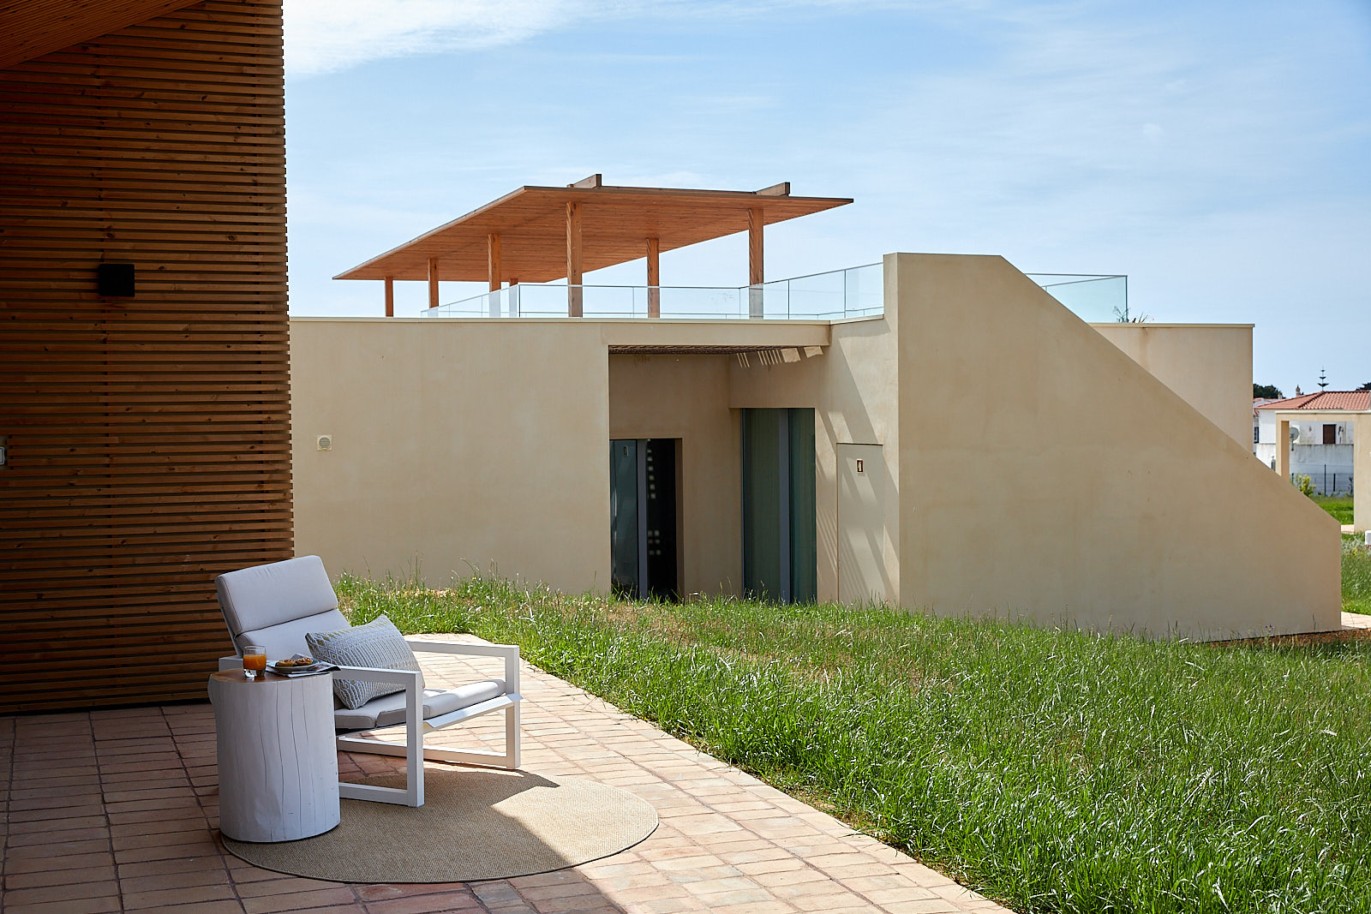 2 bedroom apartment in resort, for sale in Porches, Algarve_230575